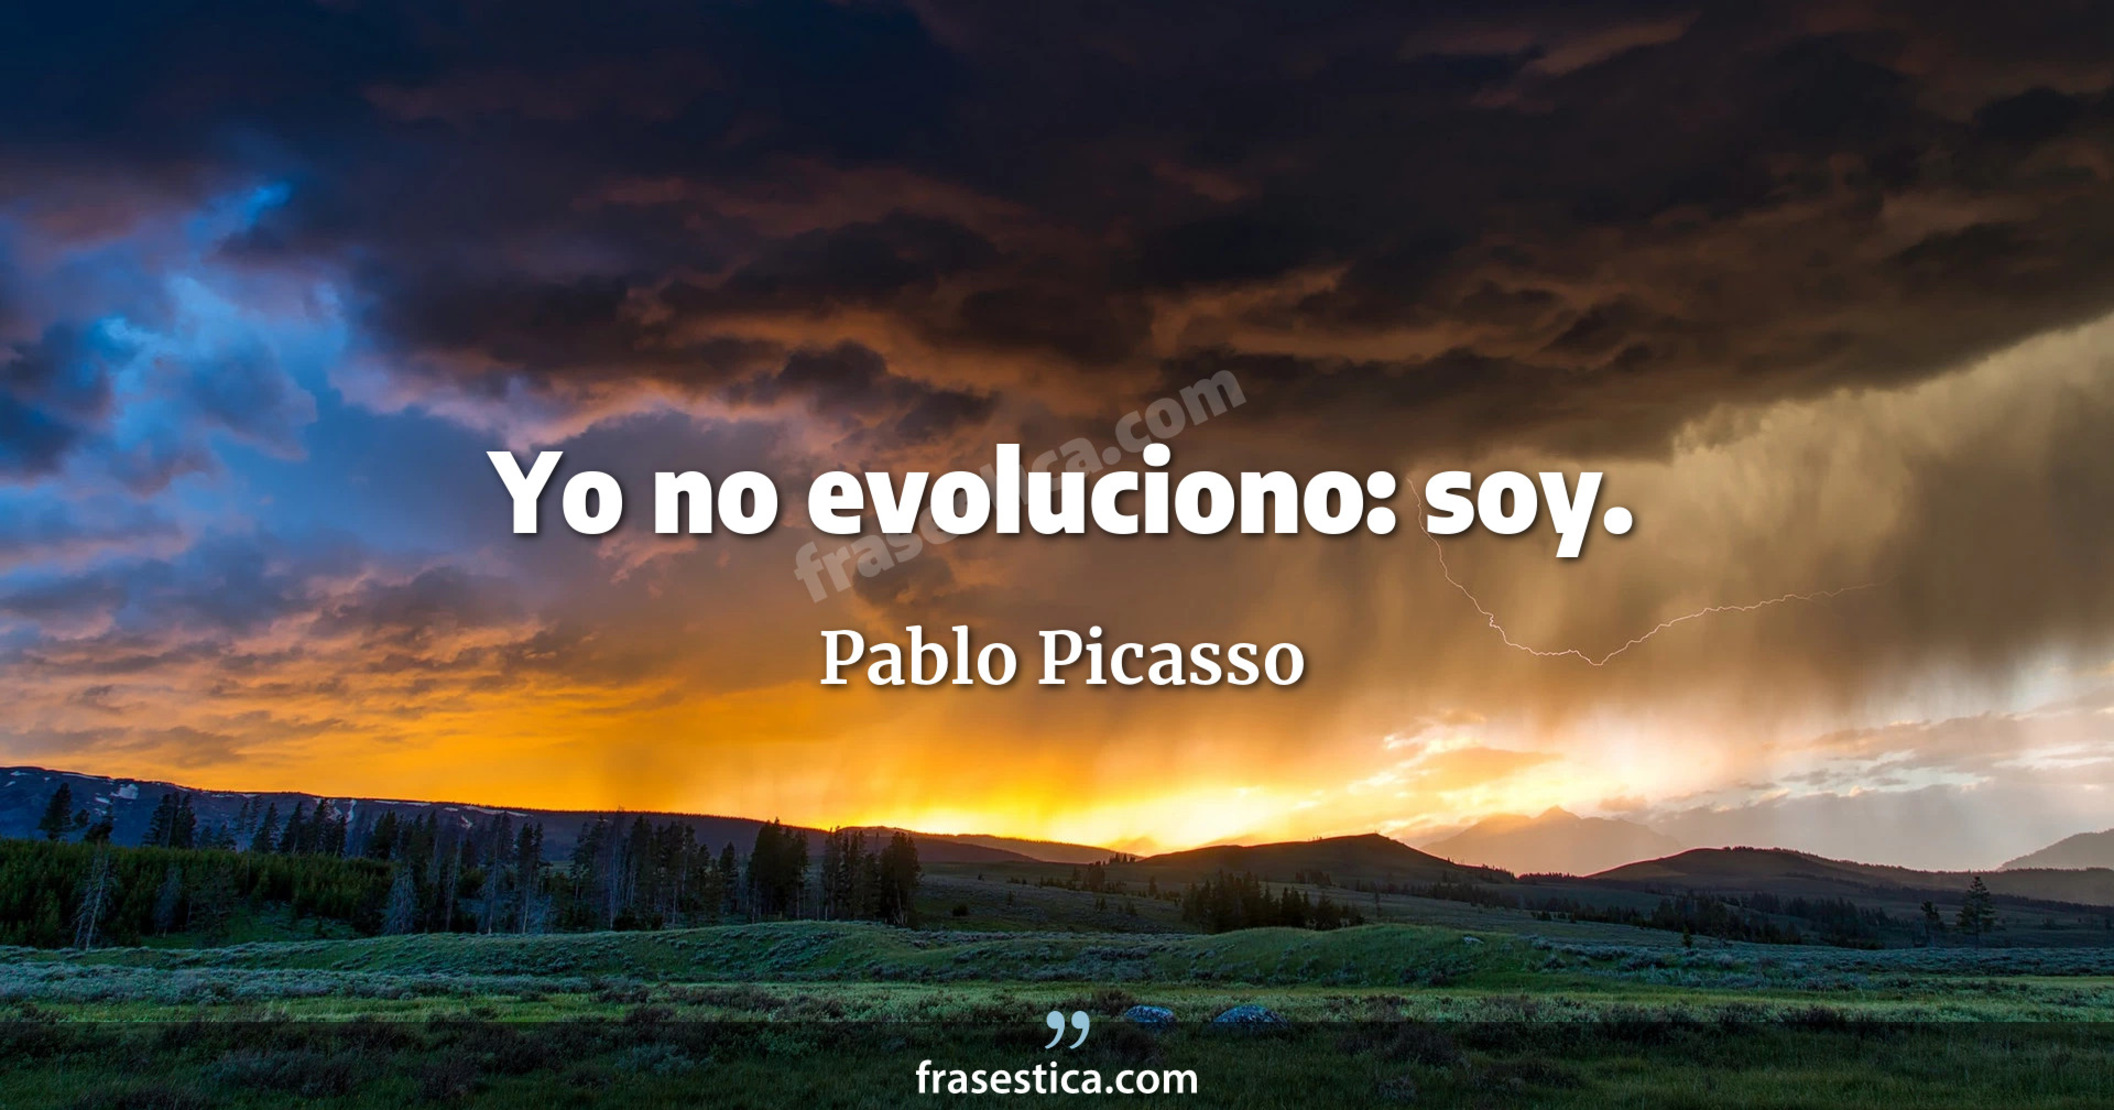 Yo no evoluciono: soy. - Pablo Picasso